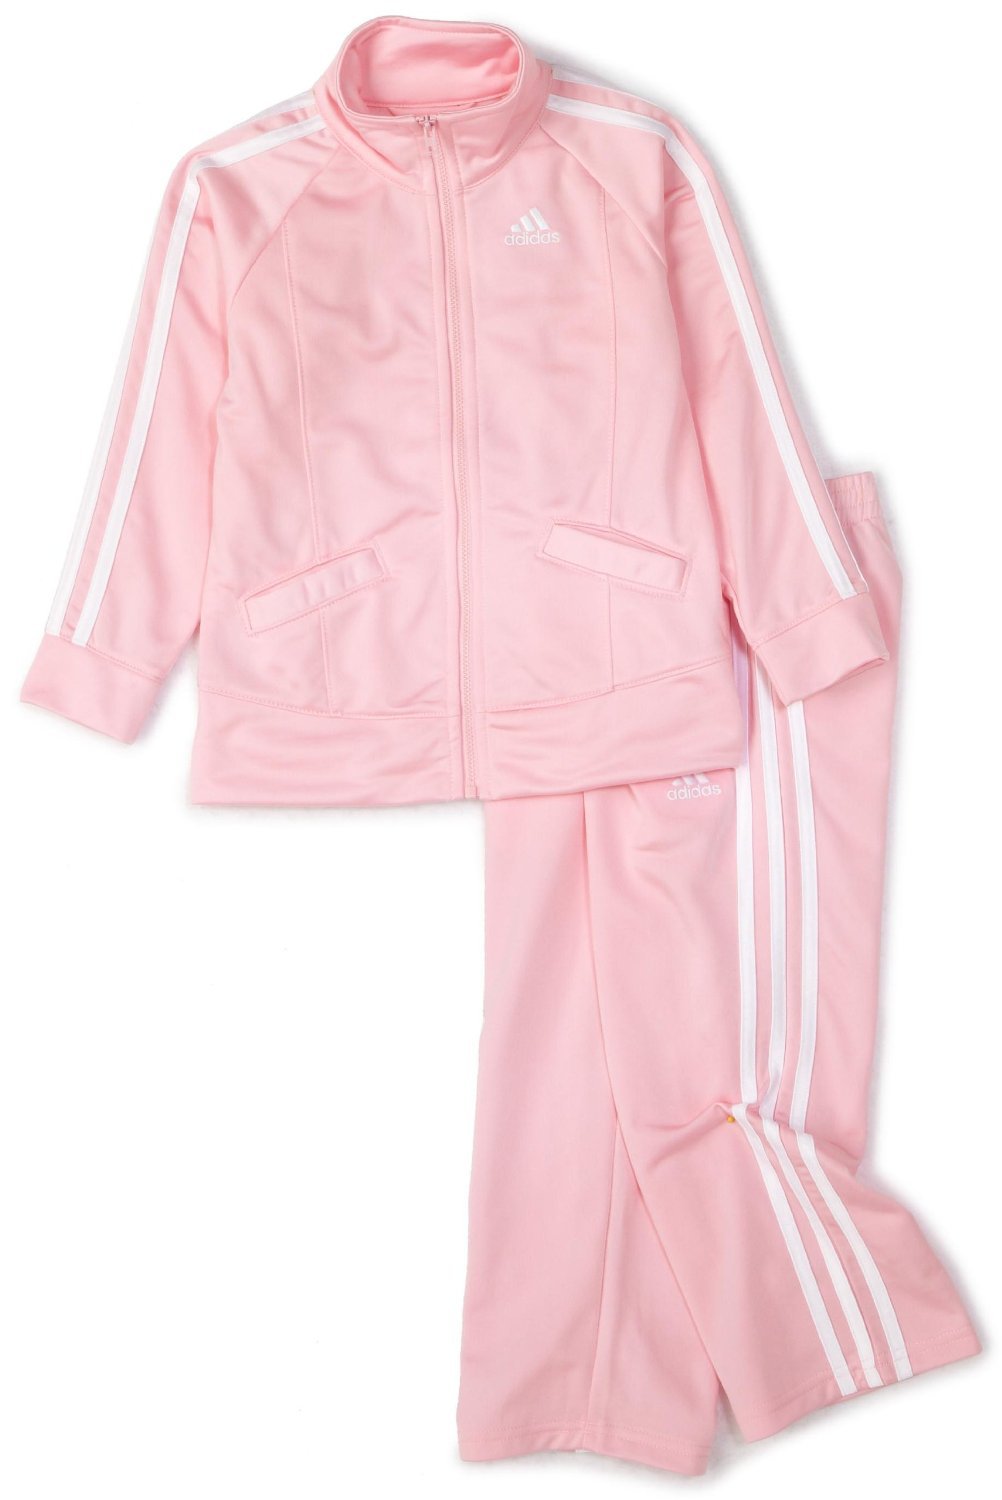 Adidas Originals Pink Tracksuit